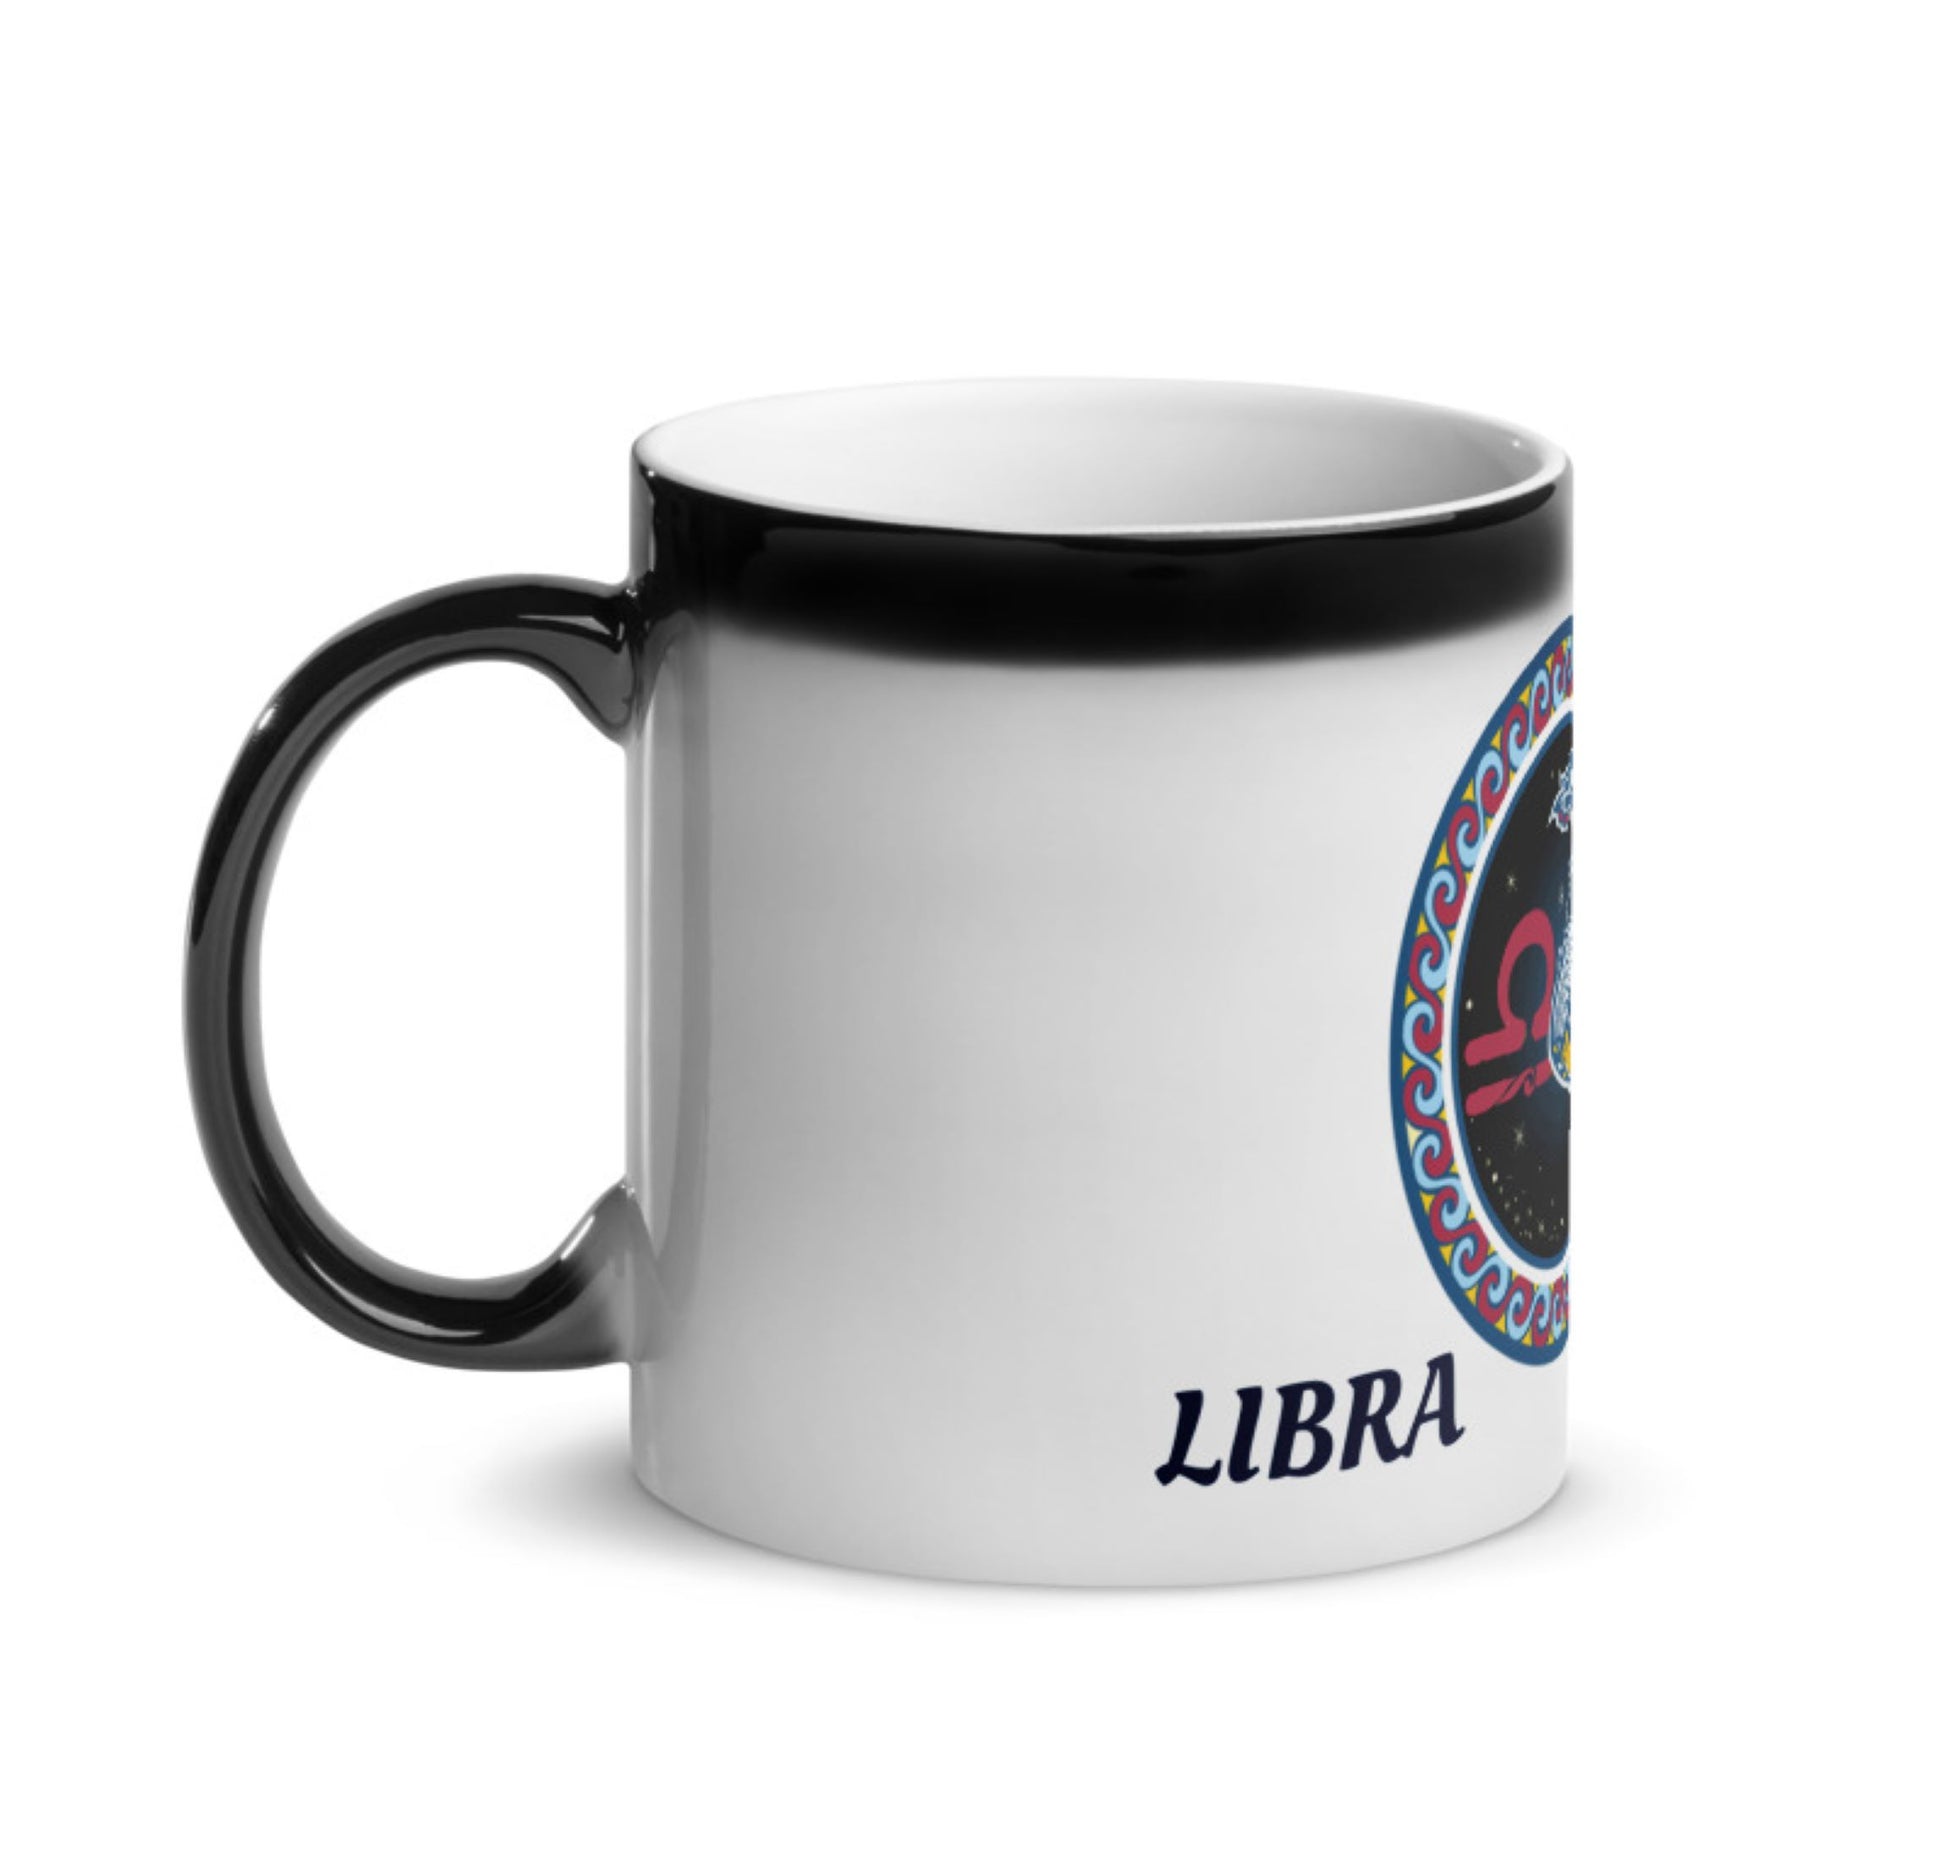 Libra love Mug - Everything Perfect